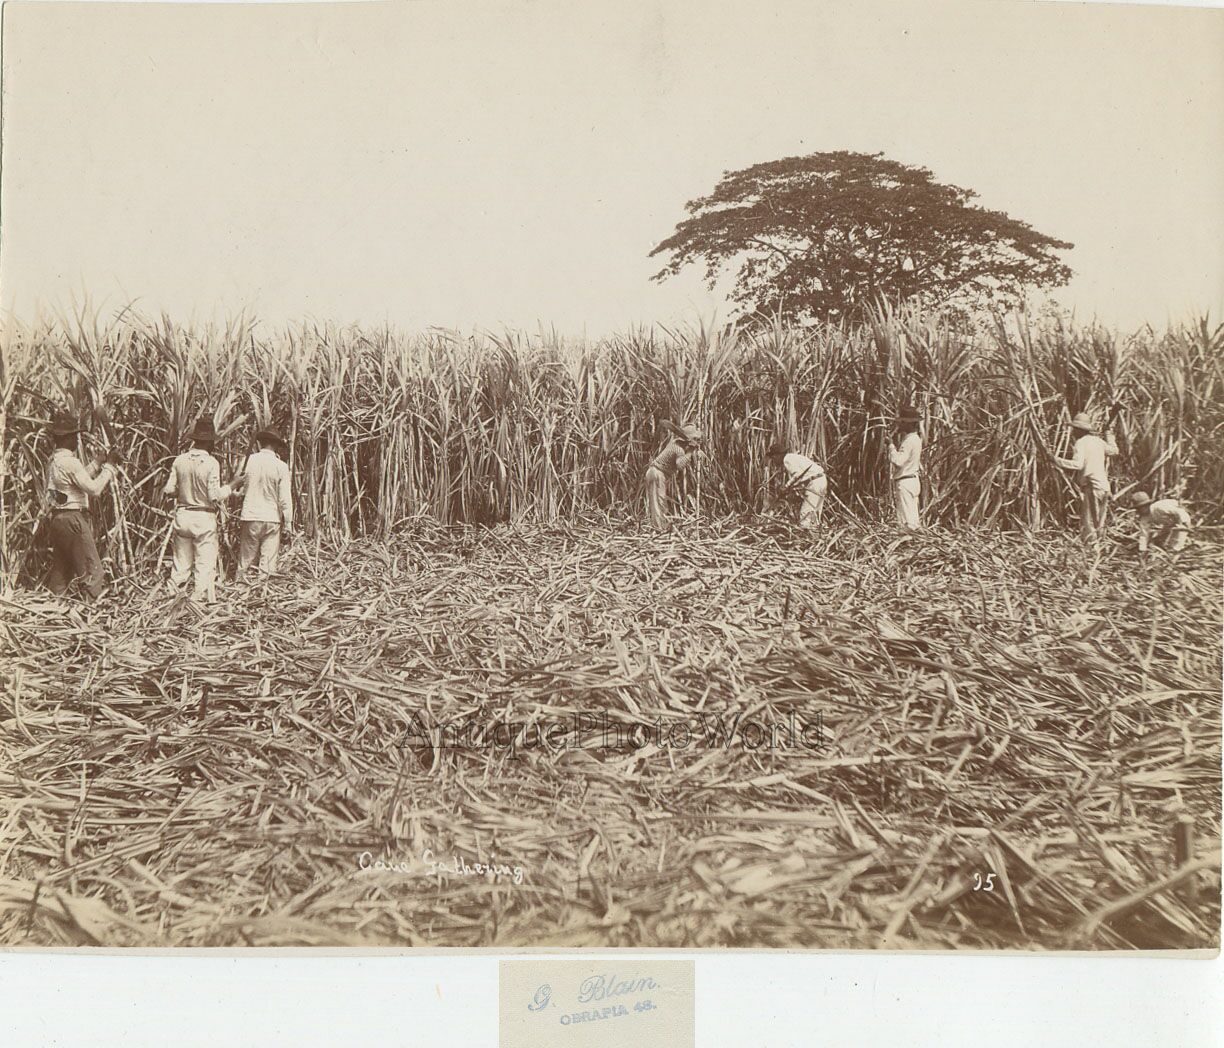 Cuba workers on sugar cane plantation antique photo by Blain